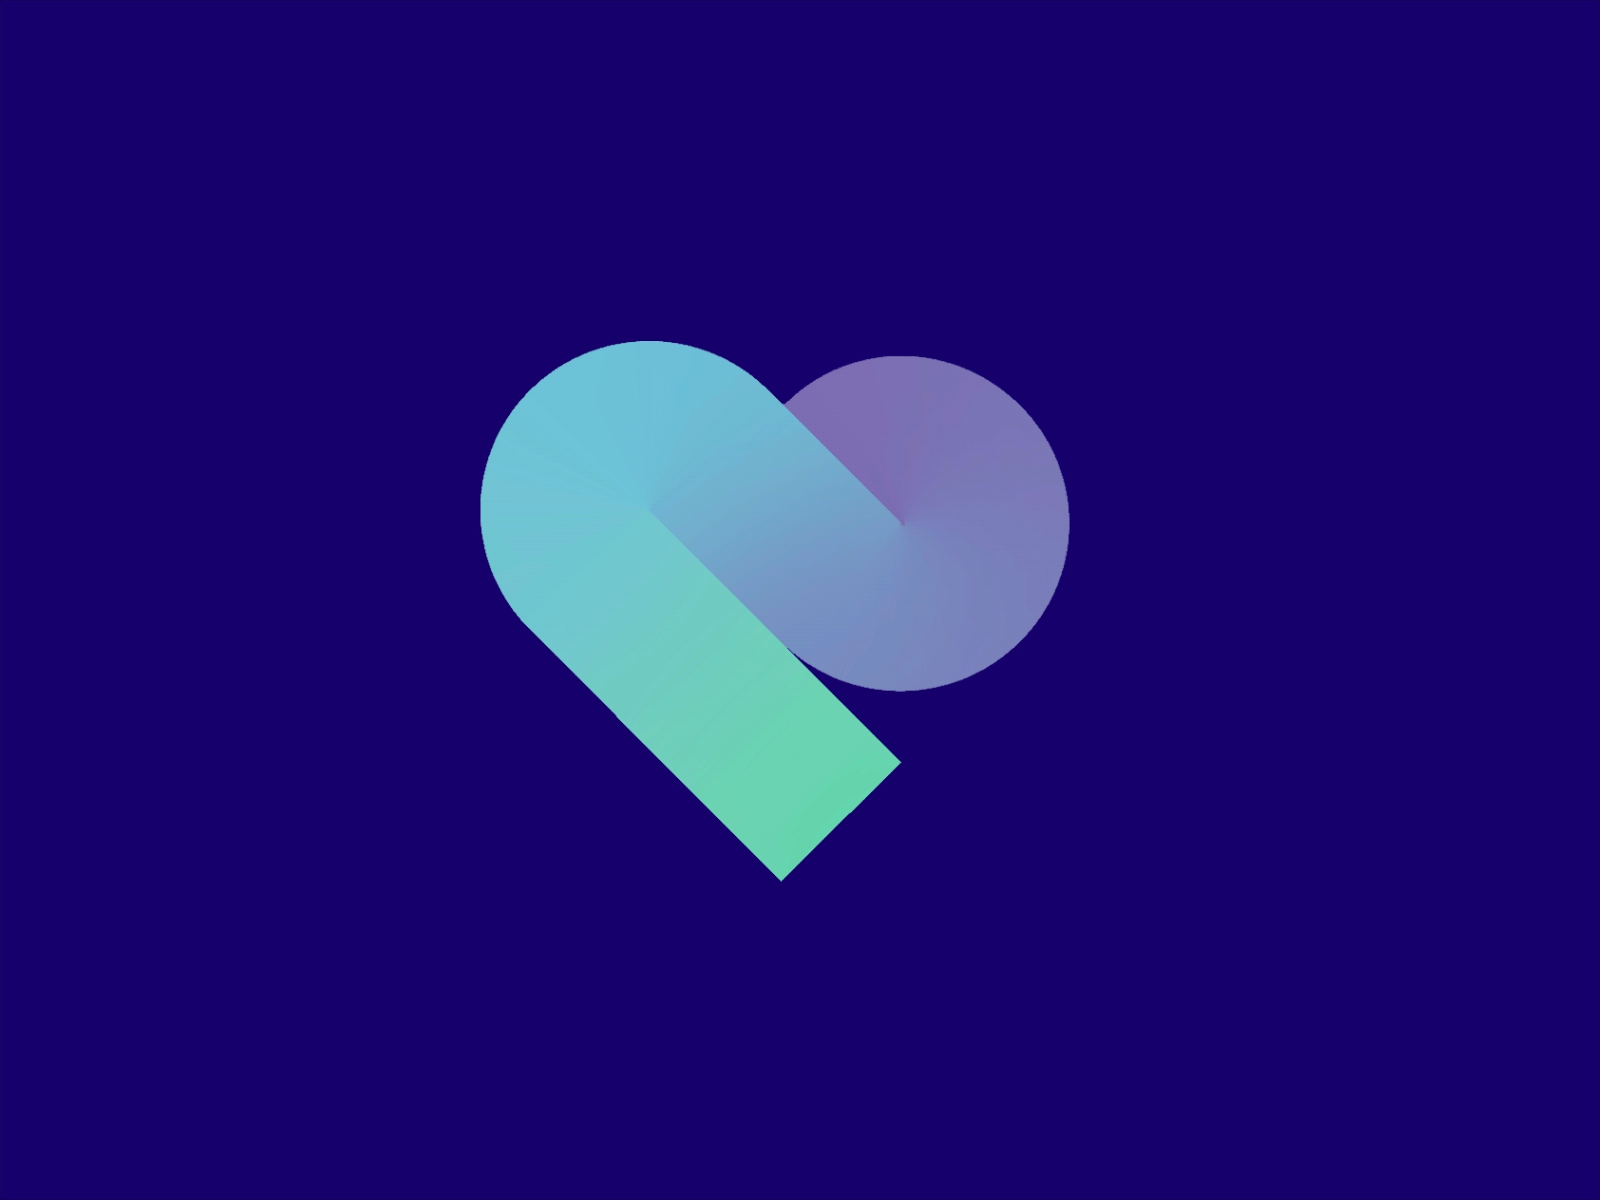 Heart logo animated concept